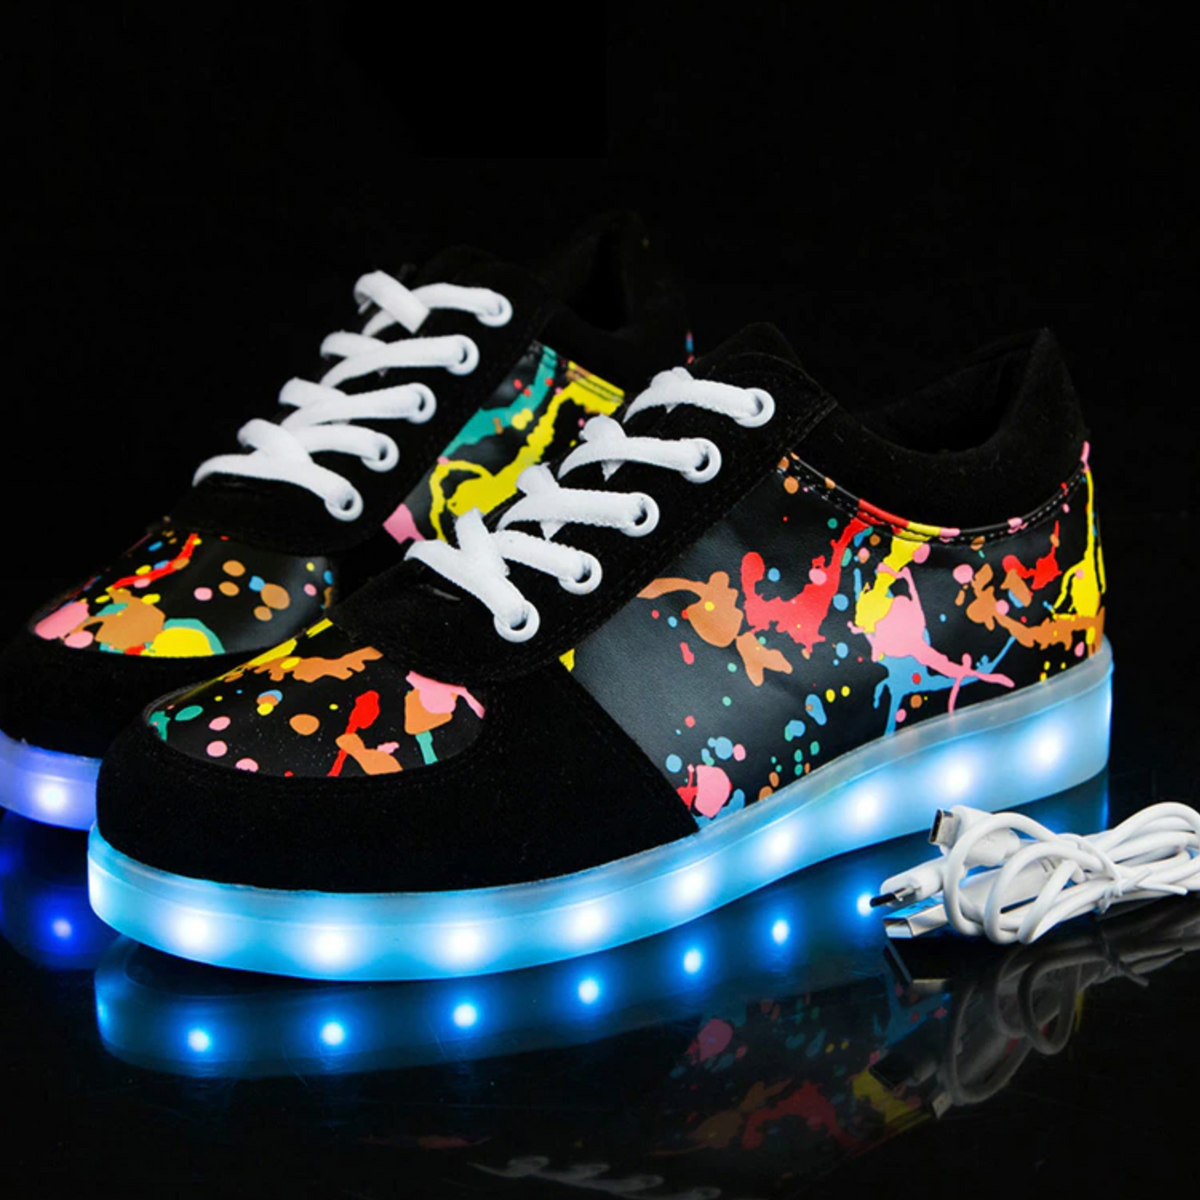 LED Shoes Pretty Perfect Design | Dancing LED Light Shoes | Kids LED